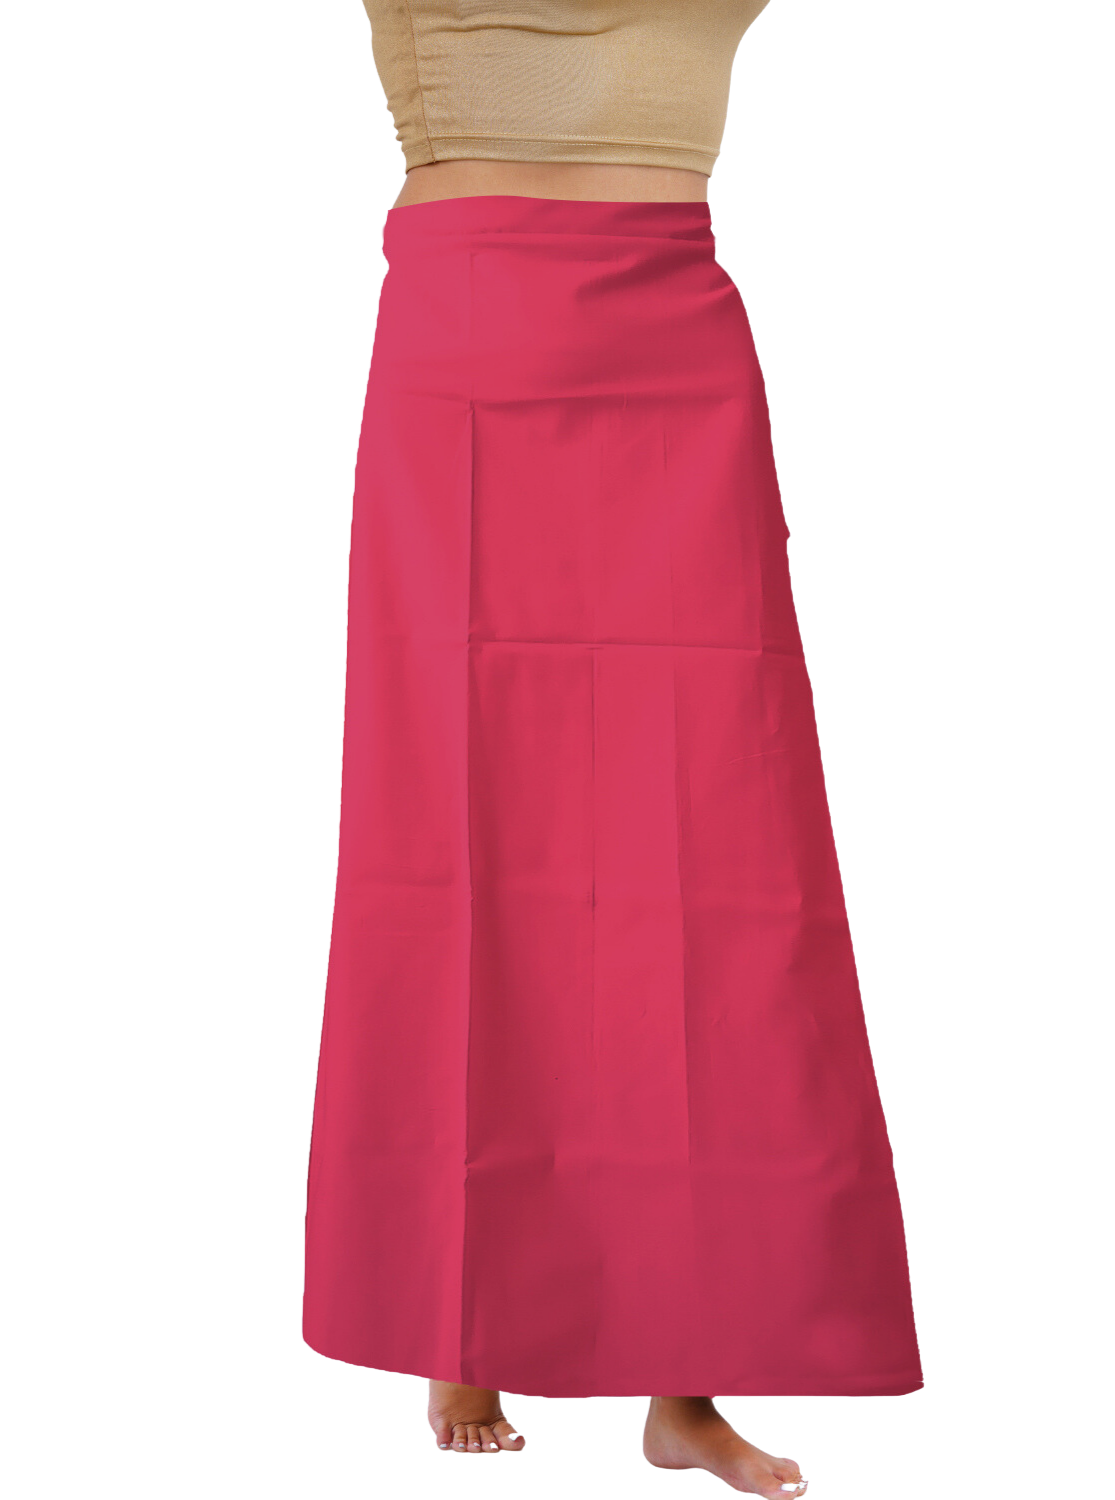 New Arrivals Premium MANGAI Embroidery Superior Cotton Petticoats - 8 PartSoft & Comfort Multicolor Petticoats